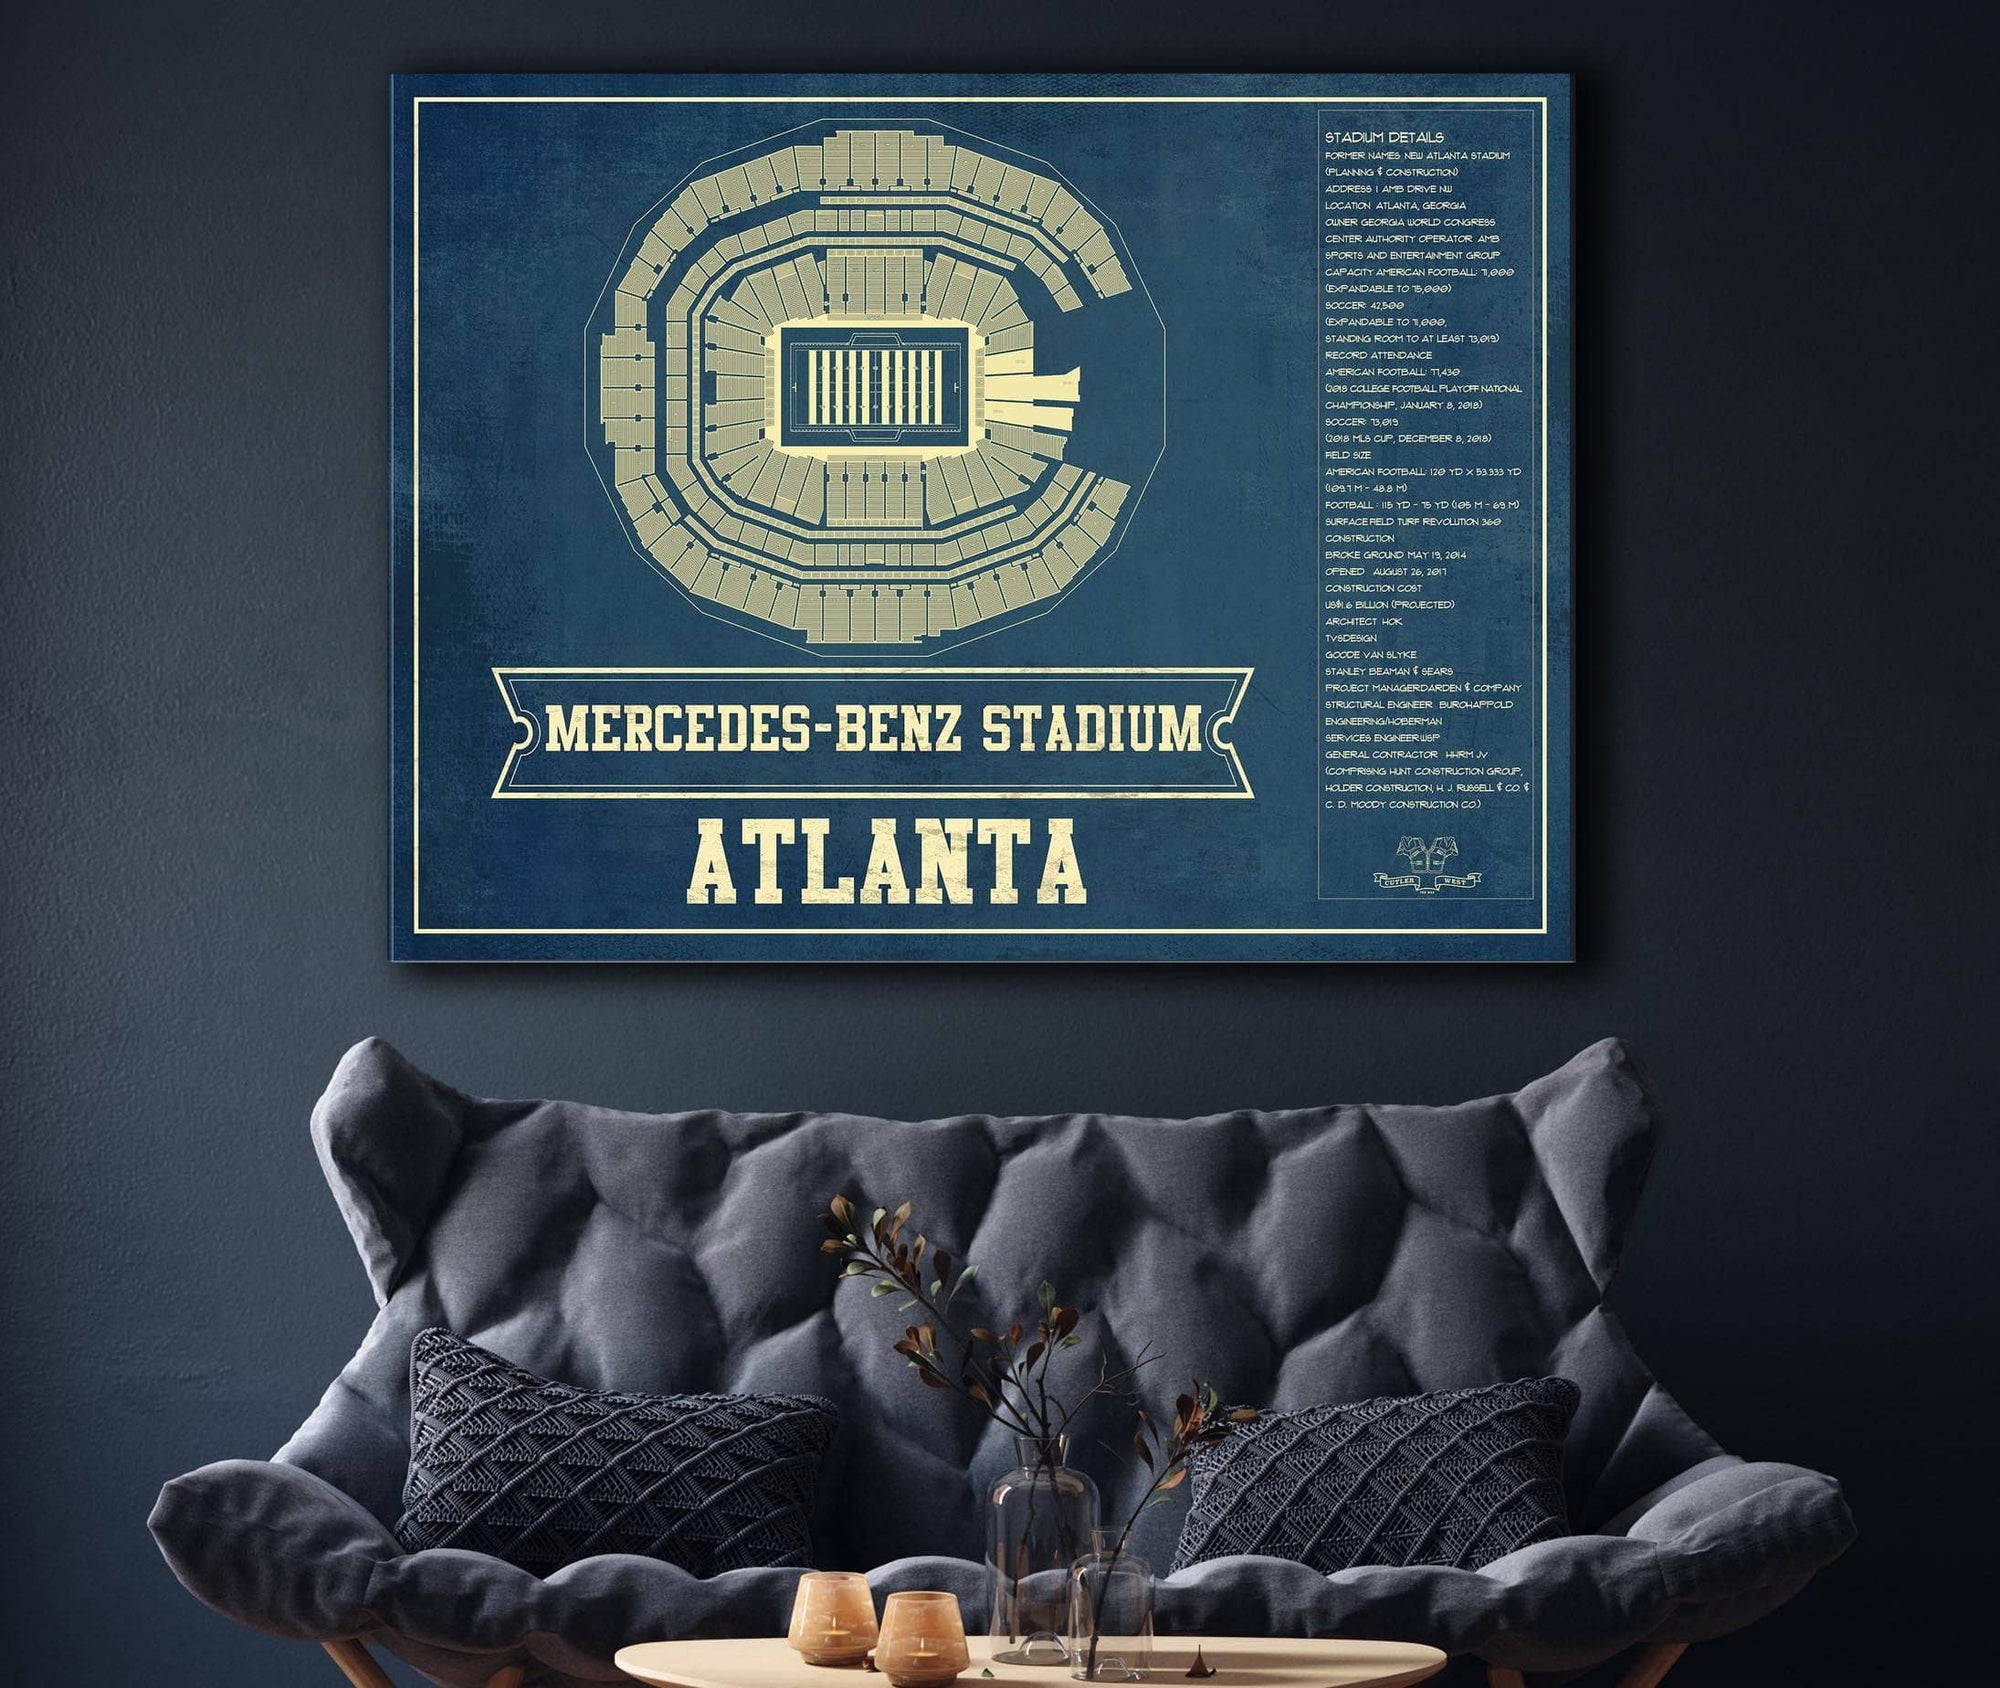 Cutler West Atlanta Falcons - Mercedes-Benz Stadium - Vintage Football Print